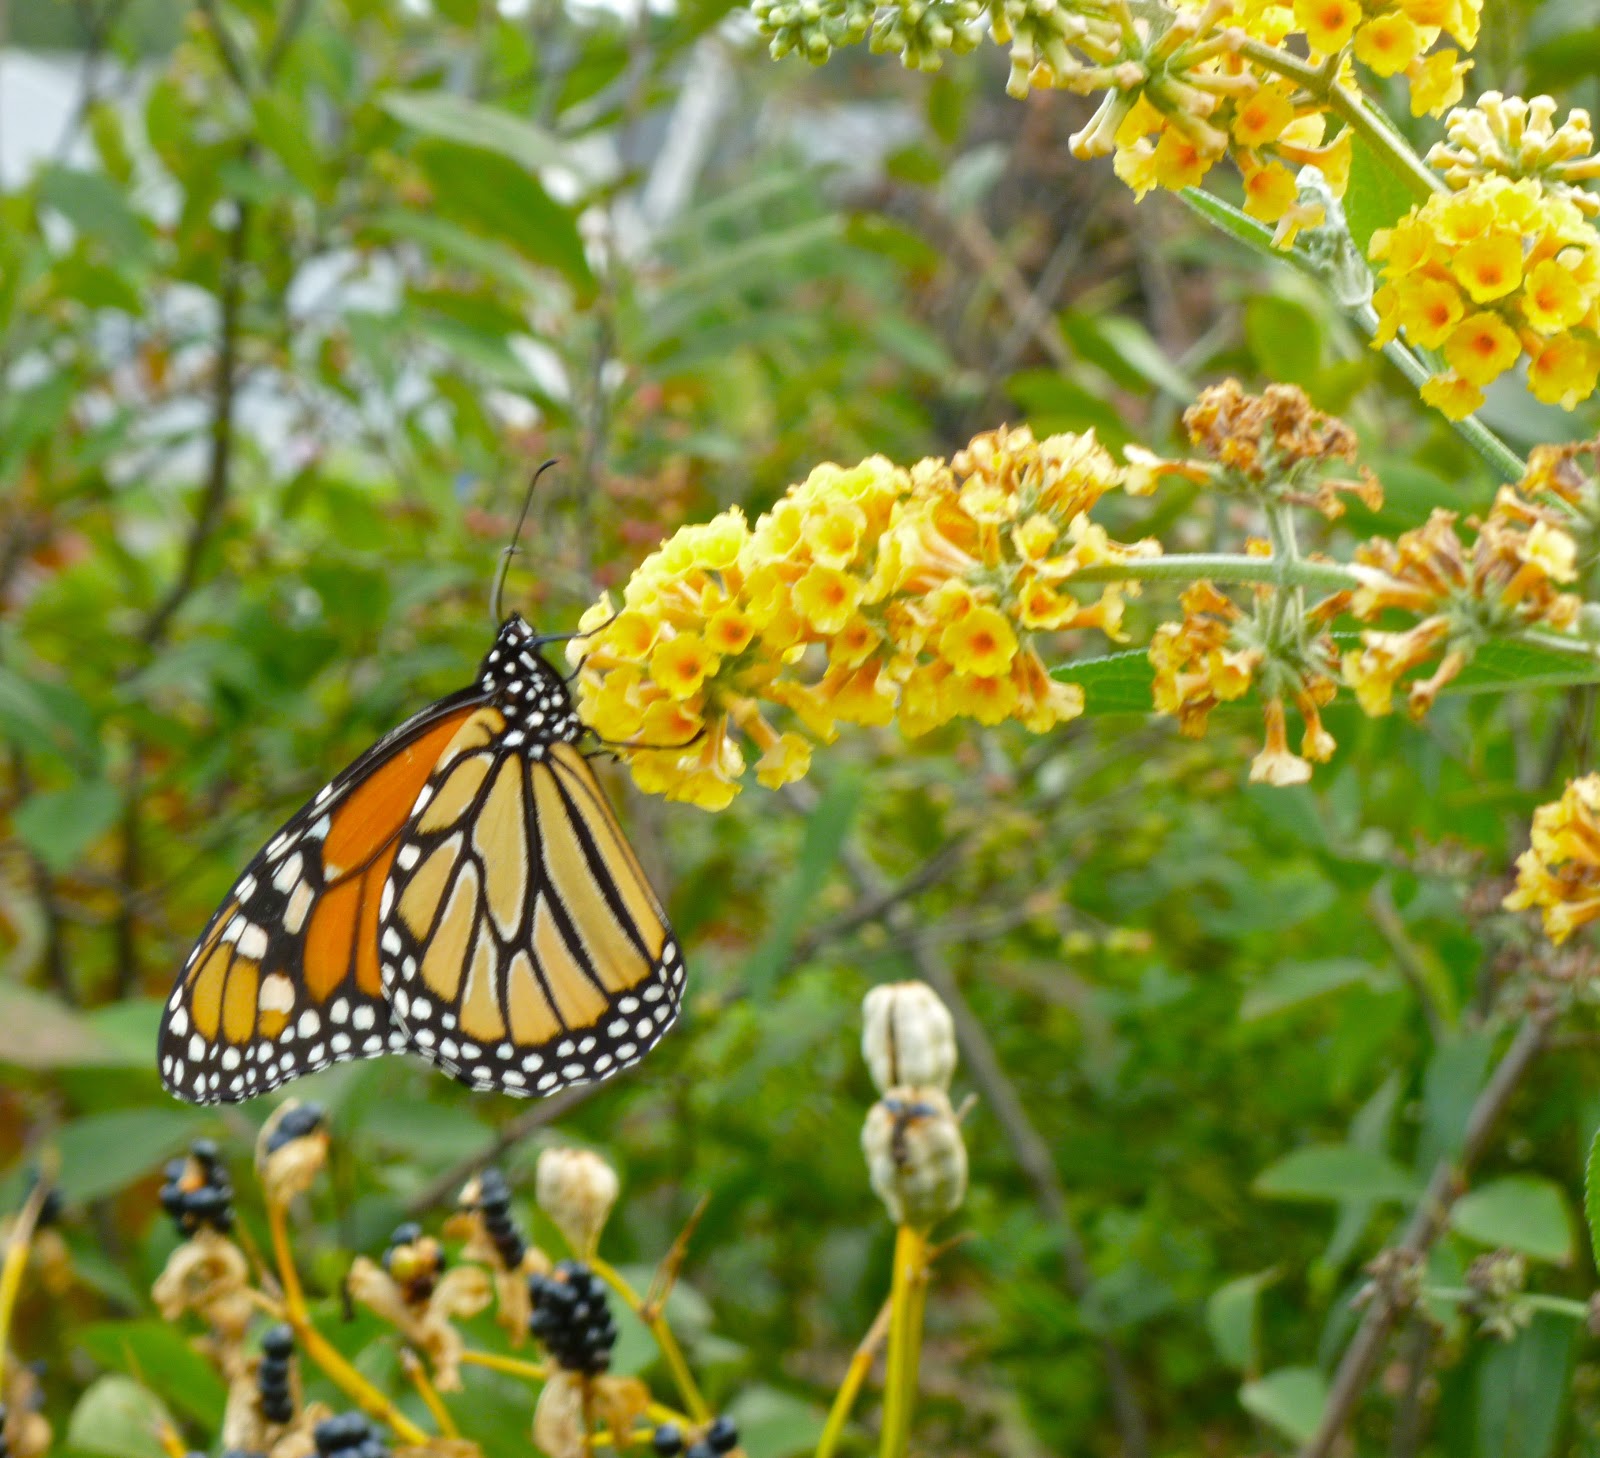 Plant Inventory: Buddleia / Butterfly Bush